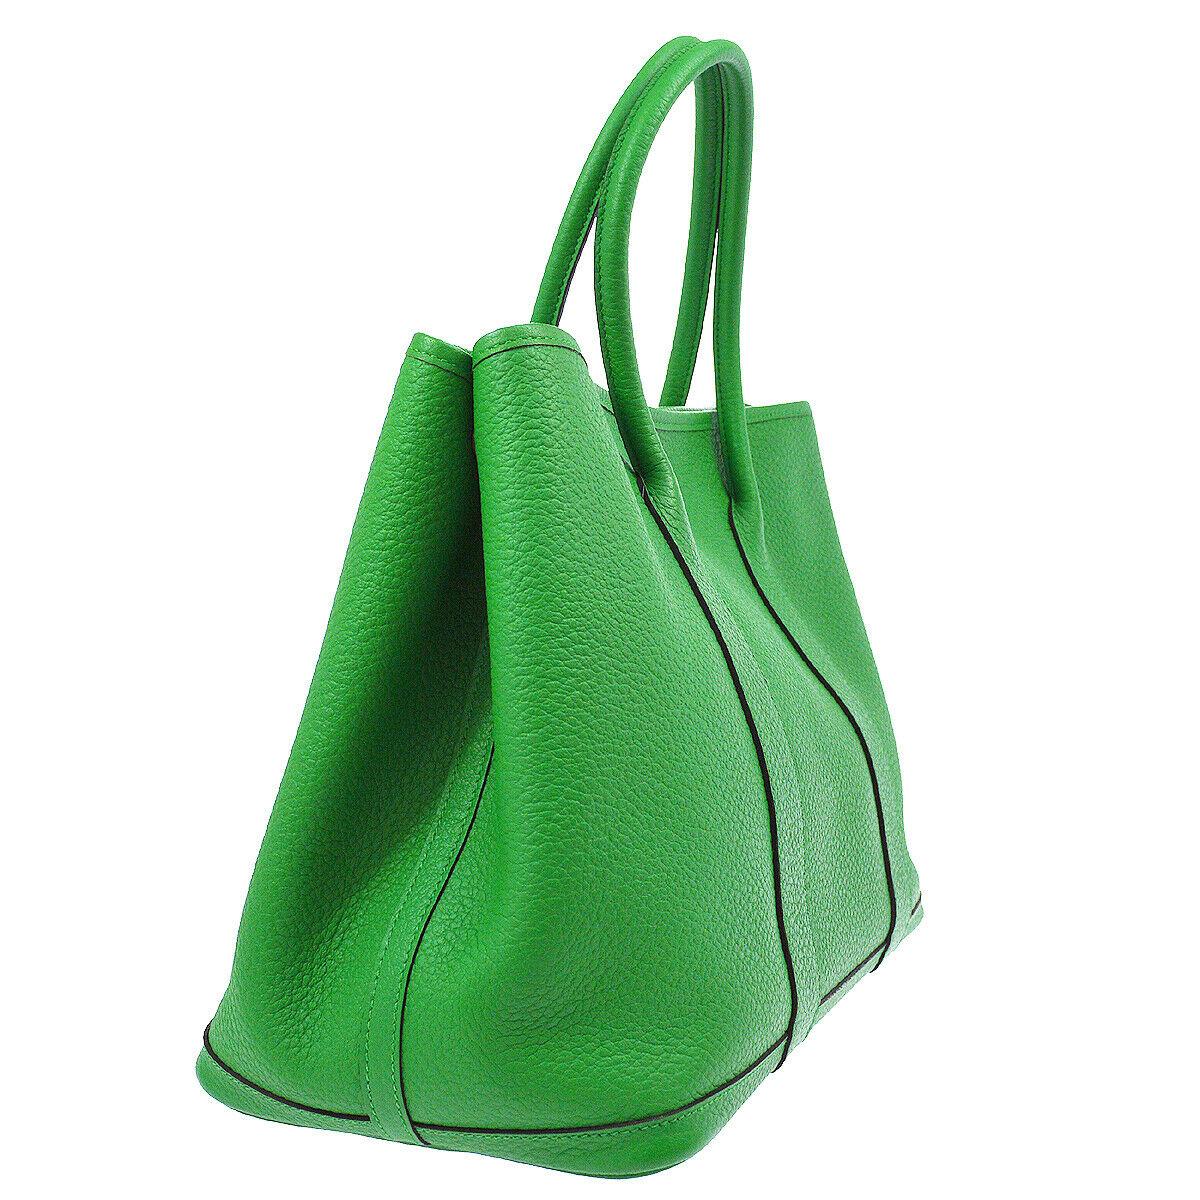 Hermes Green Leather Large Carryall Travel Garden Top Handle Satchel Tote Bag 1